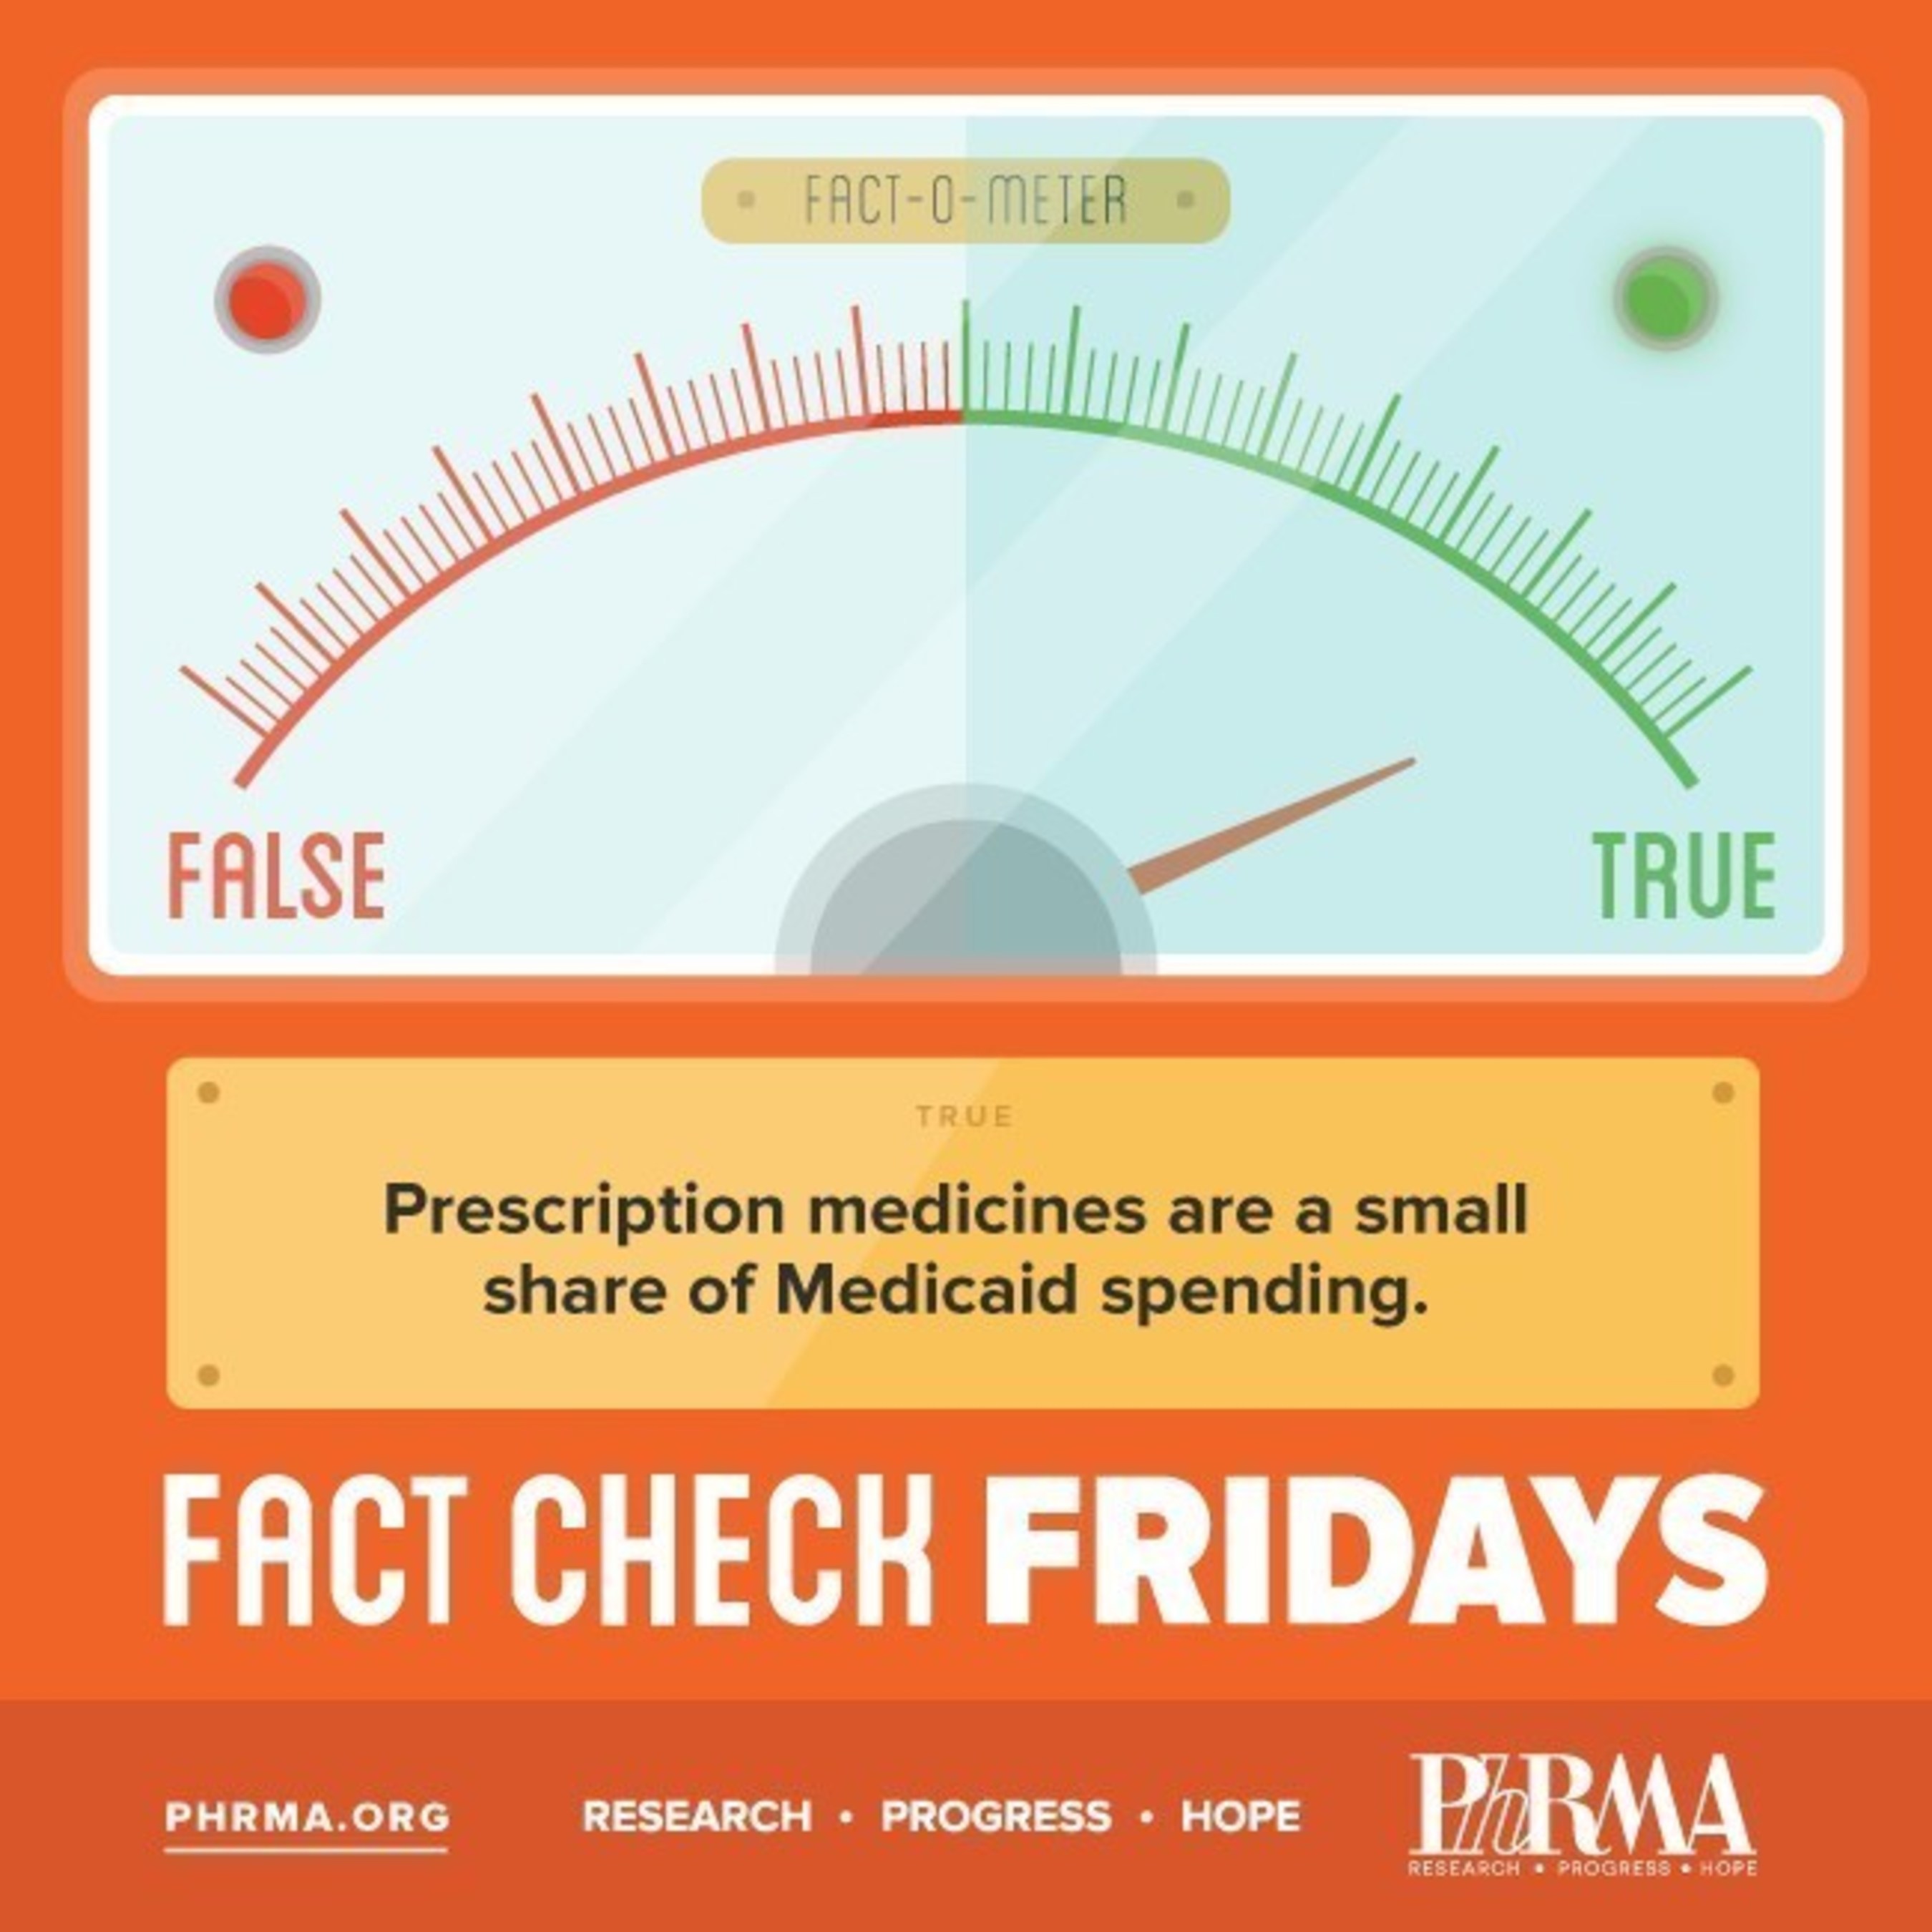 Prescription medicines are a small share of Medicaid spending.